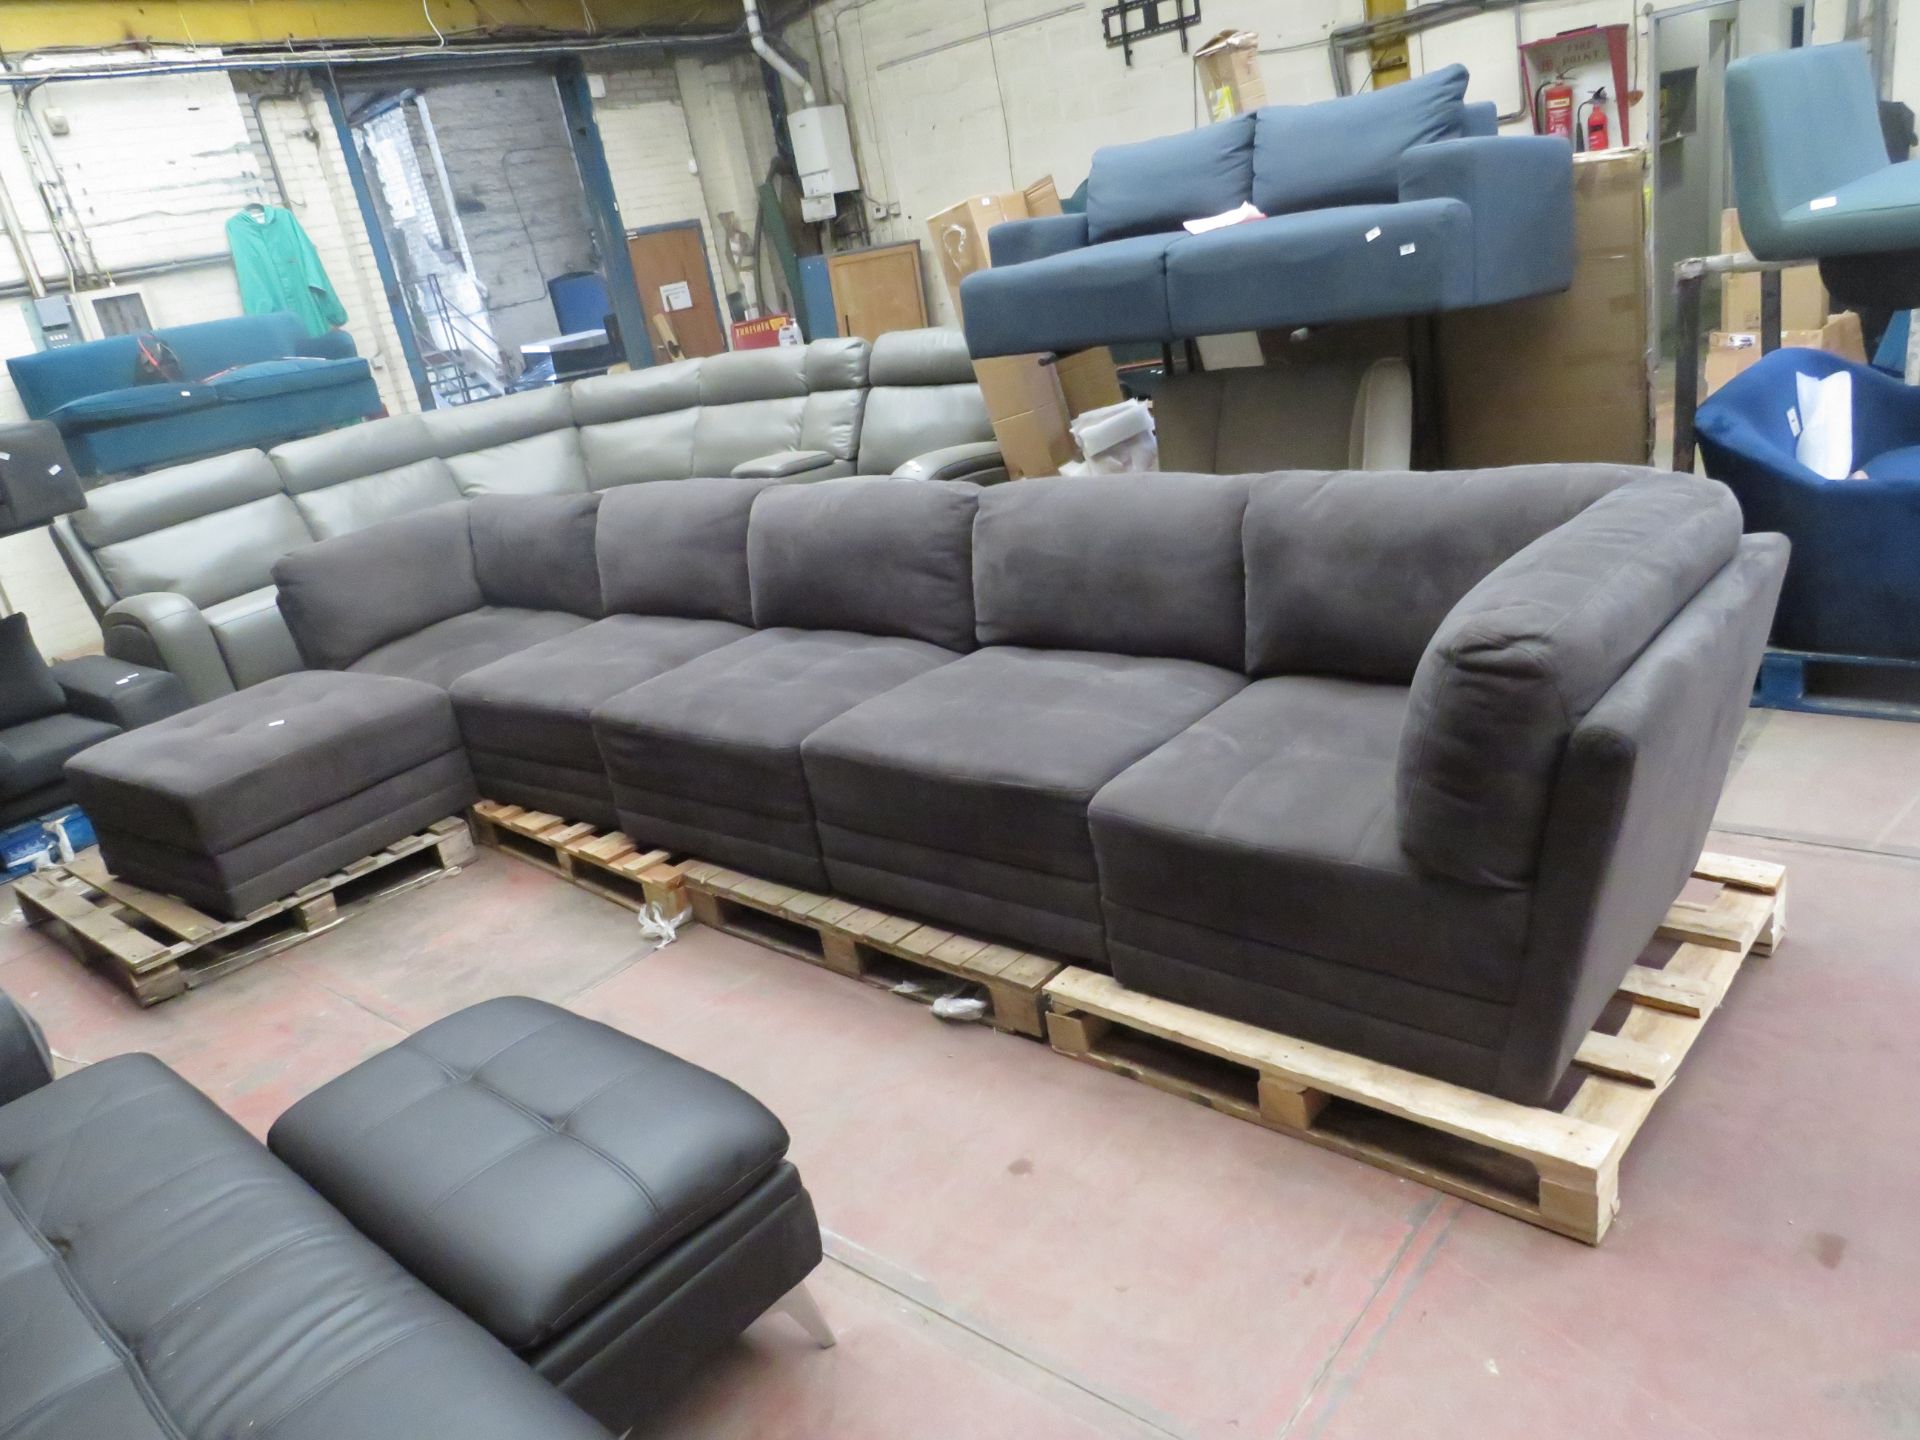 MSTAR 6 piece modular sofa set, no major damage.